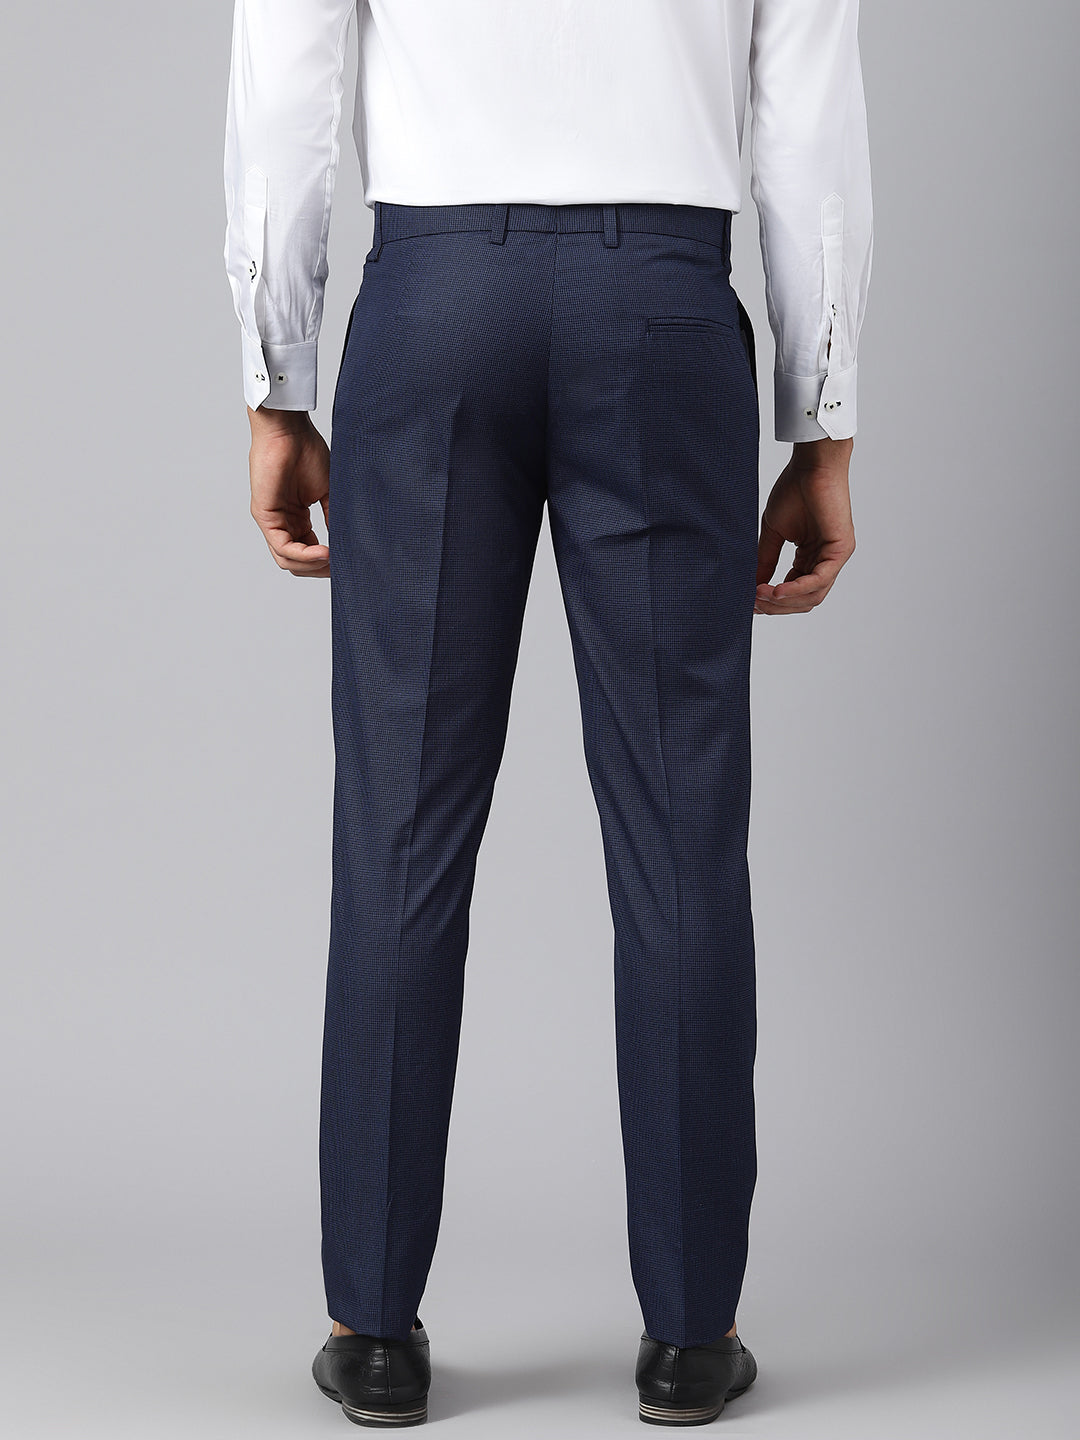 Buy Men Navy Solid Slim Fit Formal Trousers Online - 580917 | Peter England